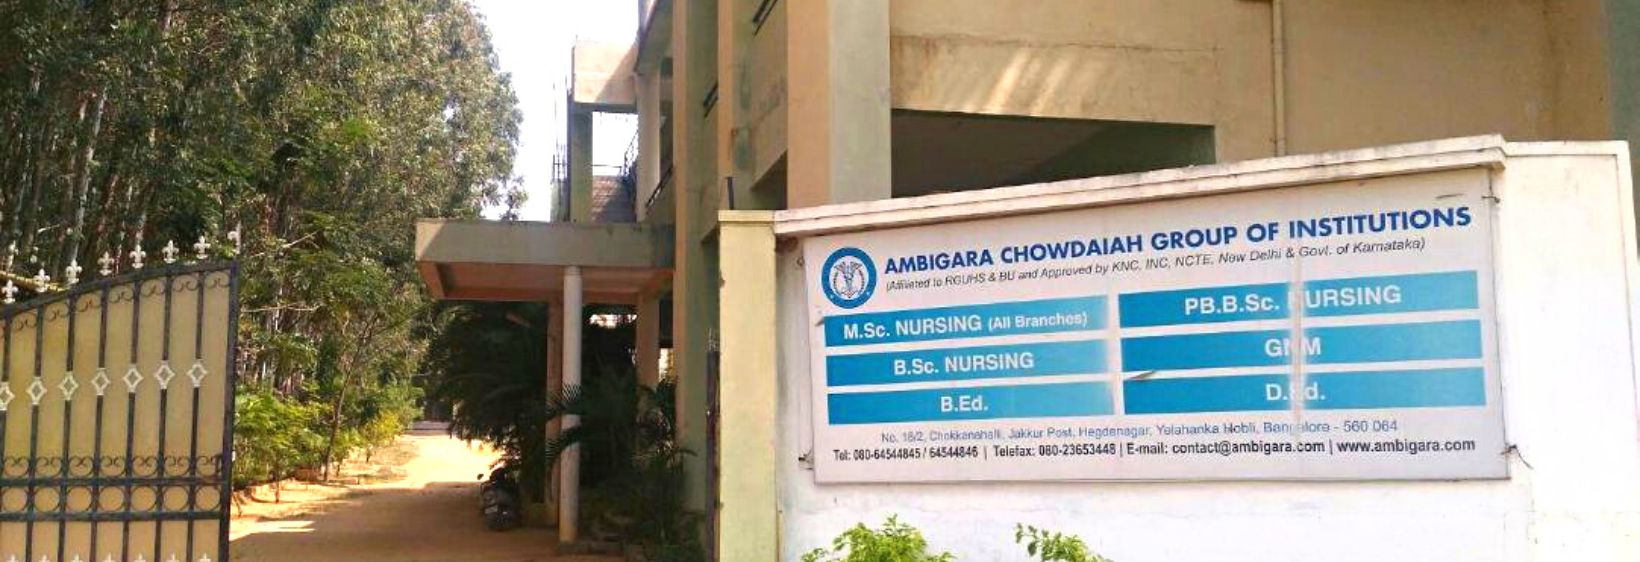 Ambigara chowdaiah College of Nursing - Bangalore